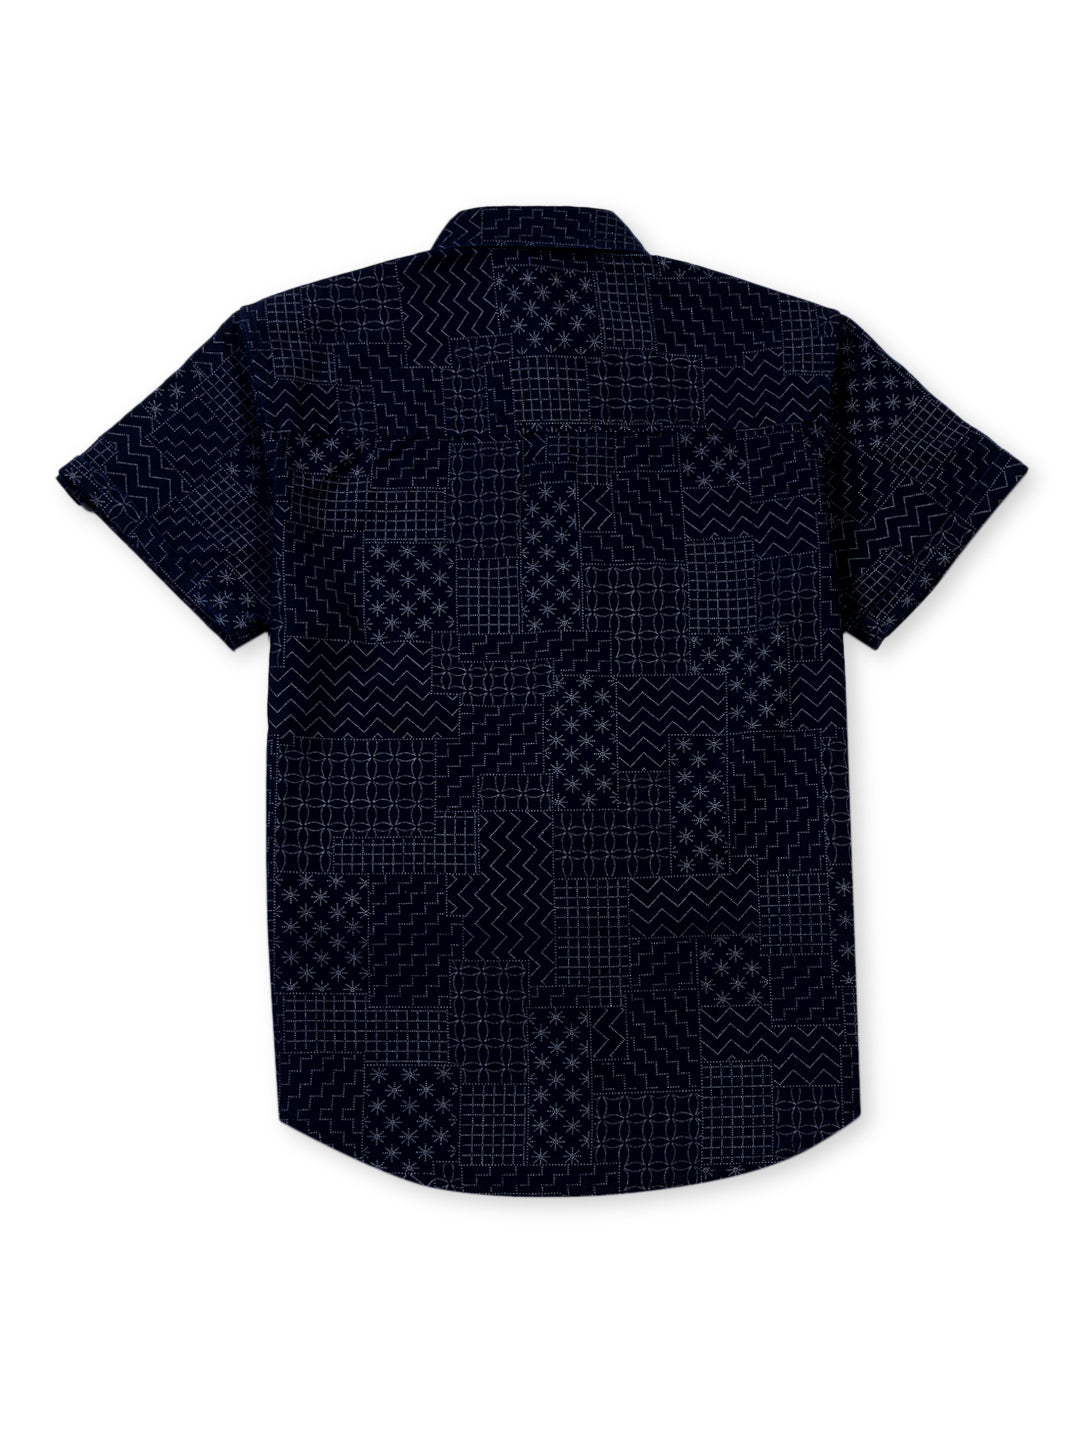 Boys Navy Blue Cotton Denim Printed Shirt